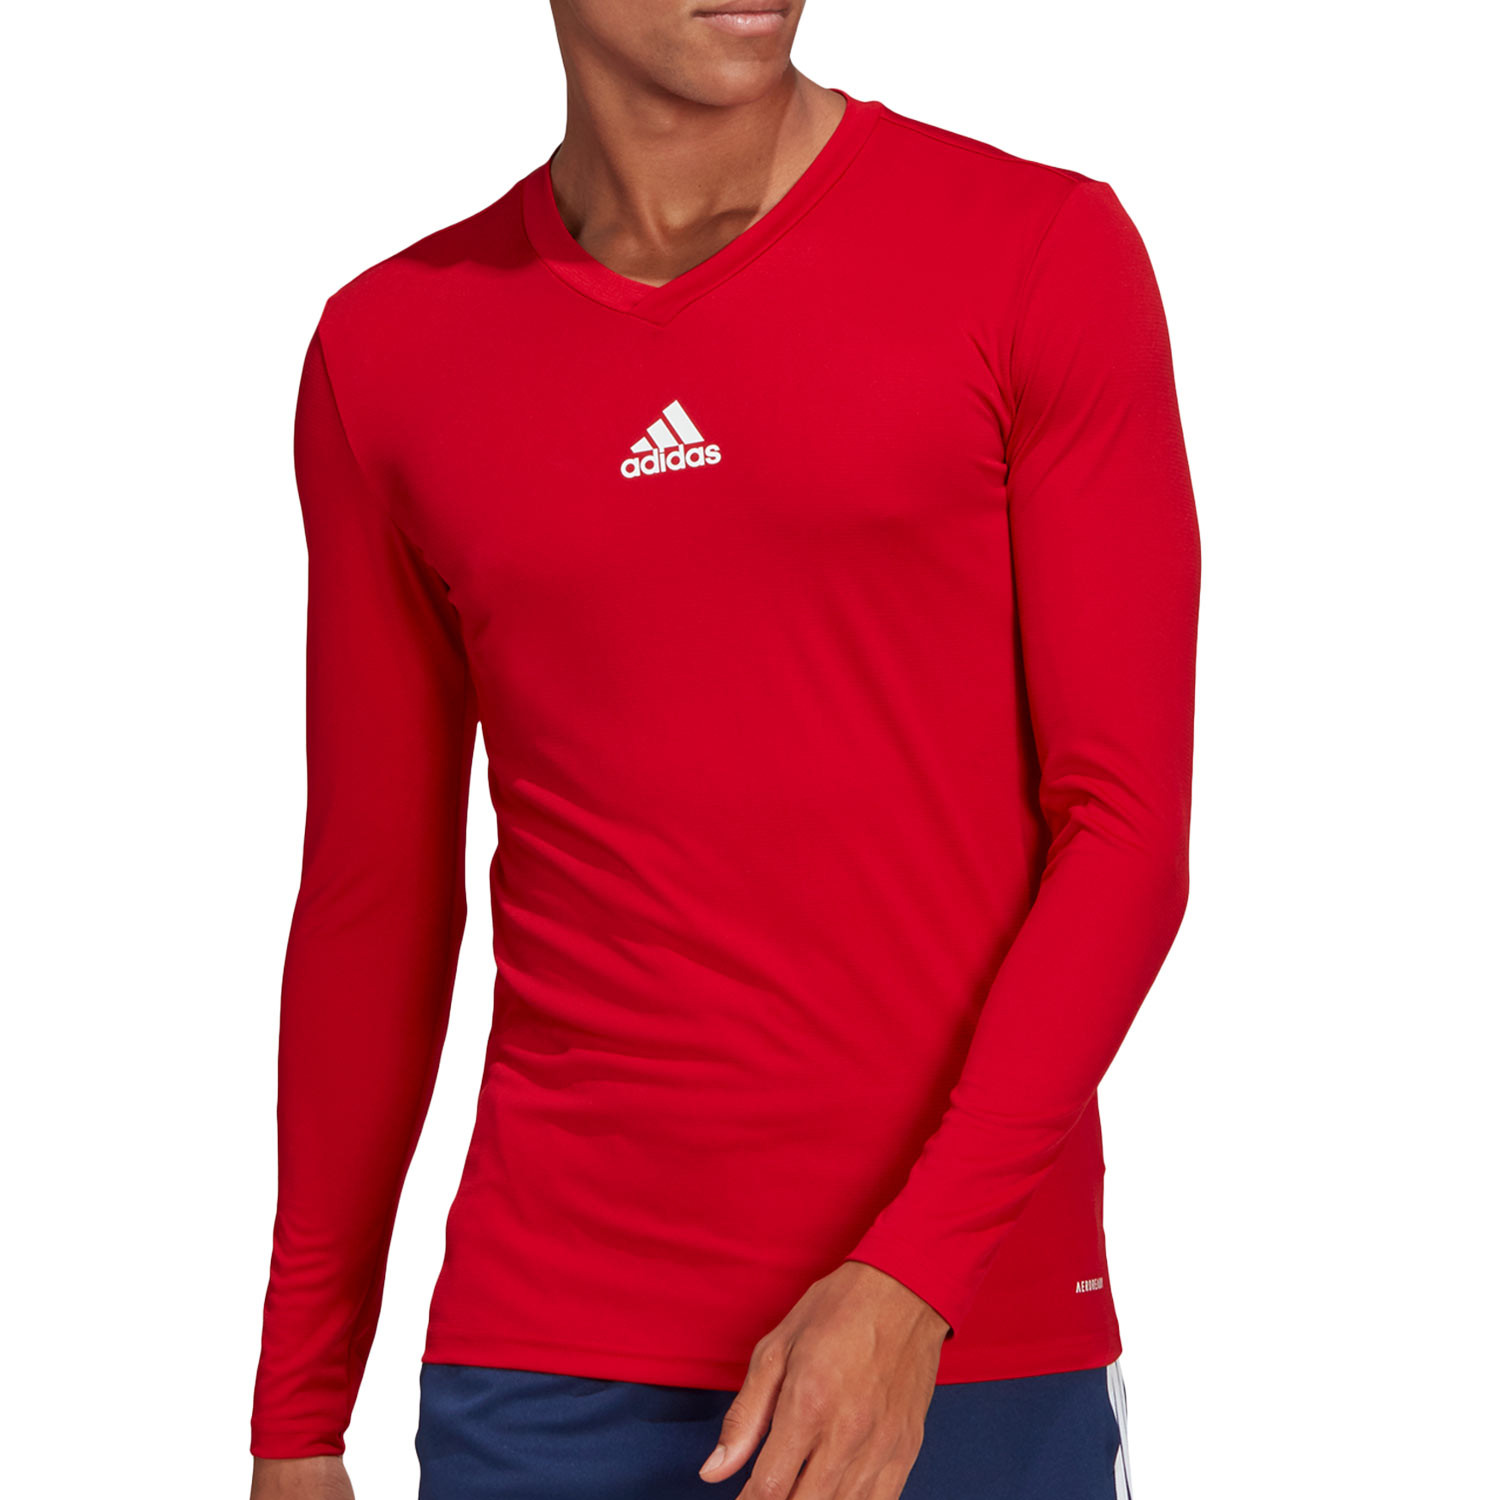 Camiseta adidas Team roja futbolmania